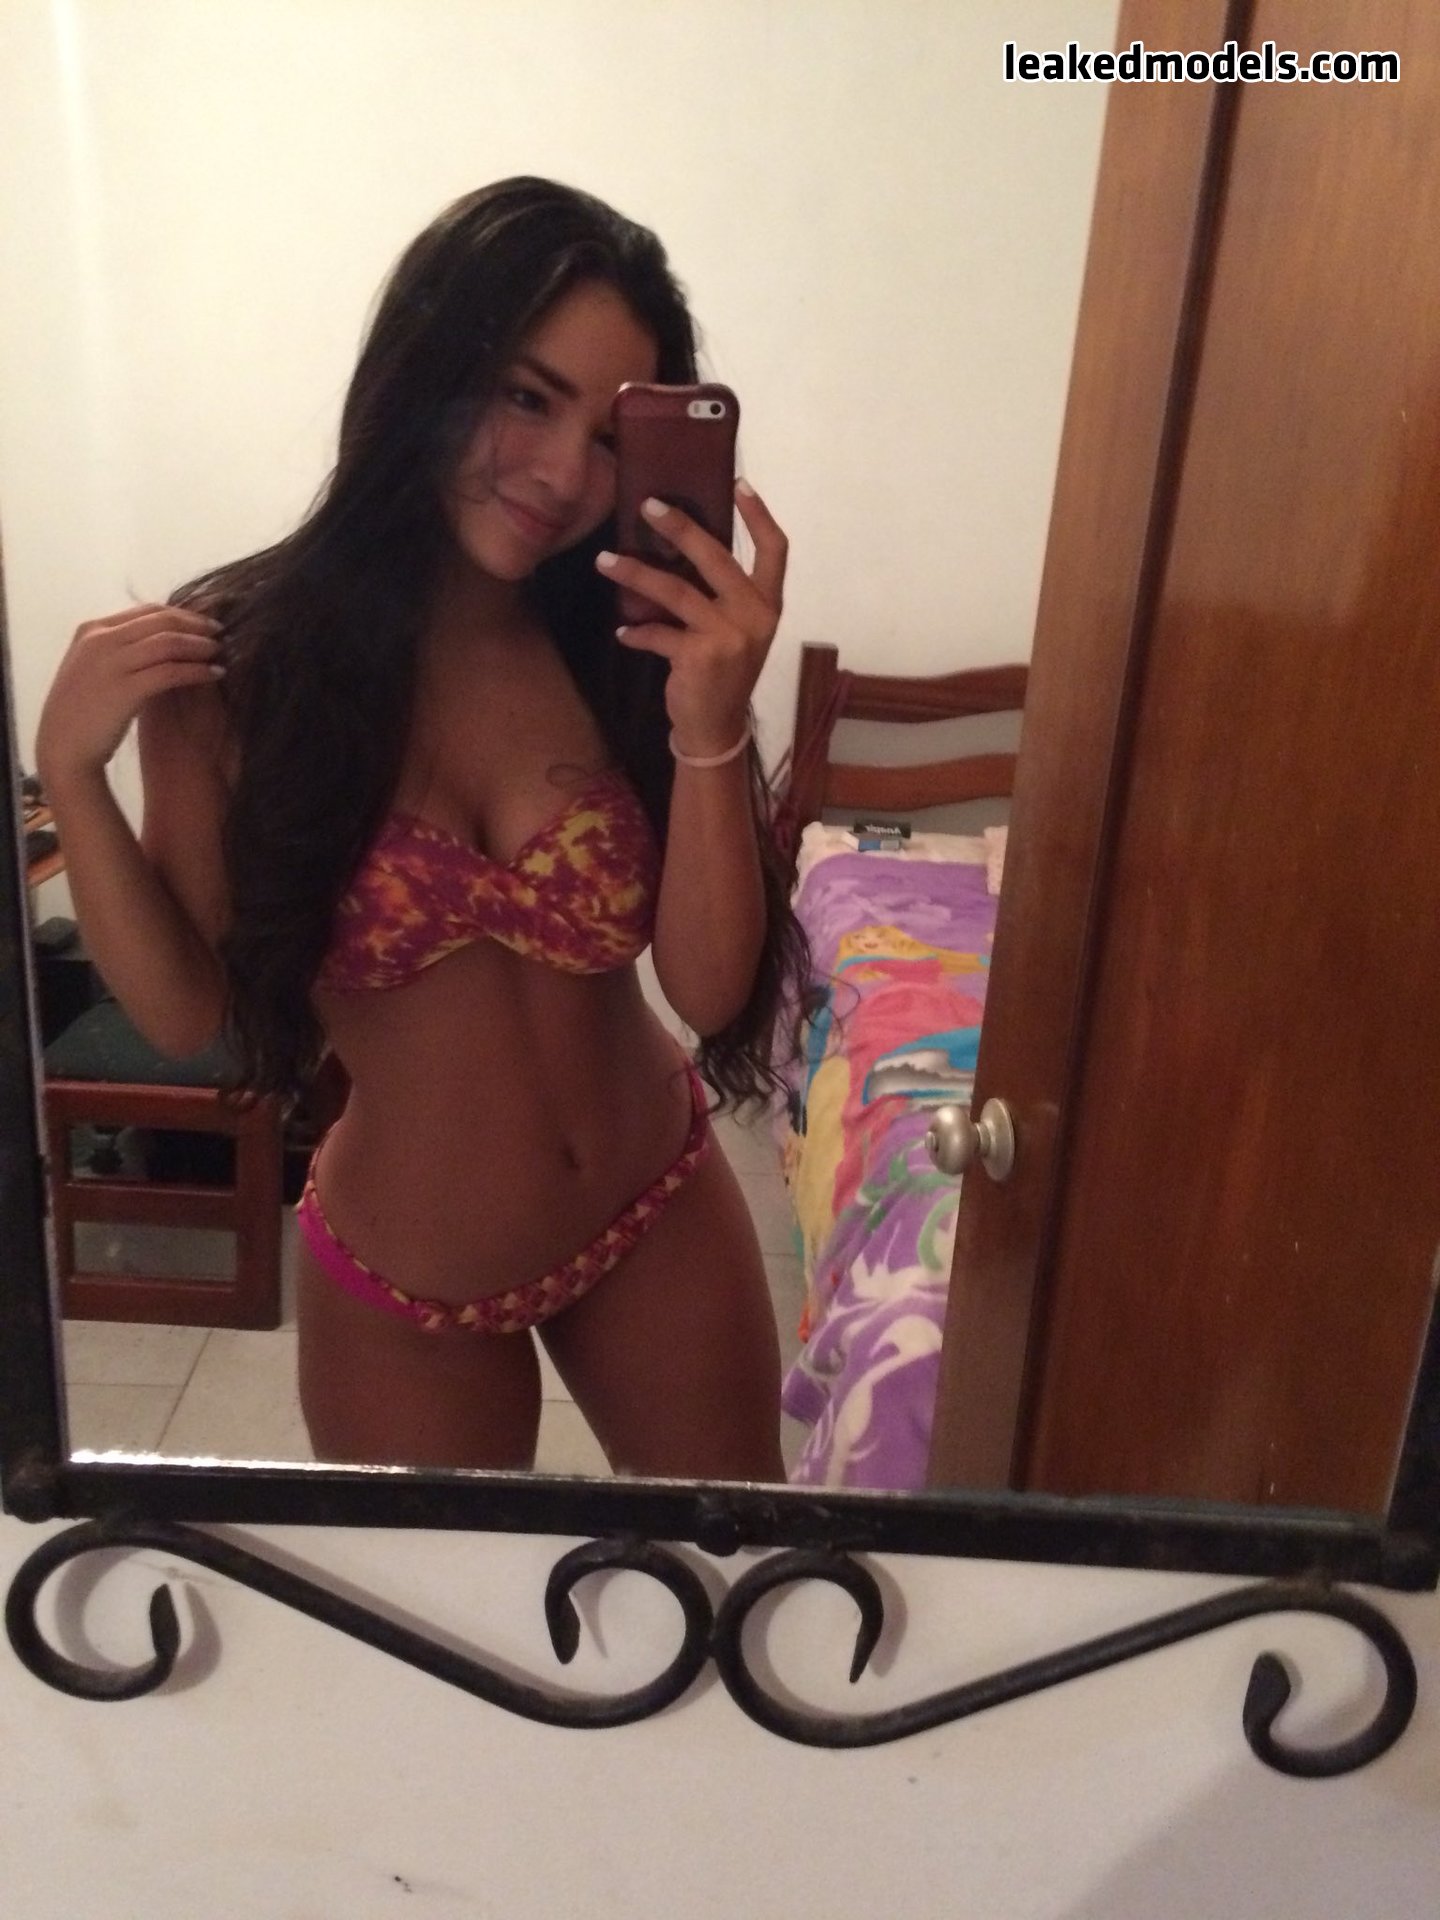 katy gomita leaked nude leakedmodels.com 0016 - Katherine Alejandra Martínez – Katy Gomita OnlyFans Sexy Leaks (30 Photos)